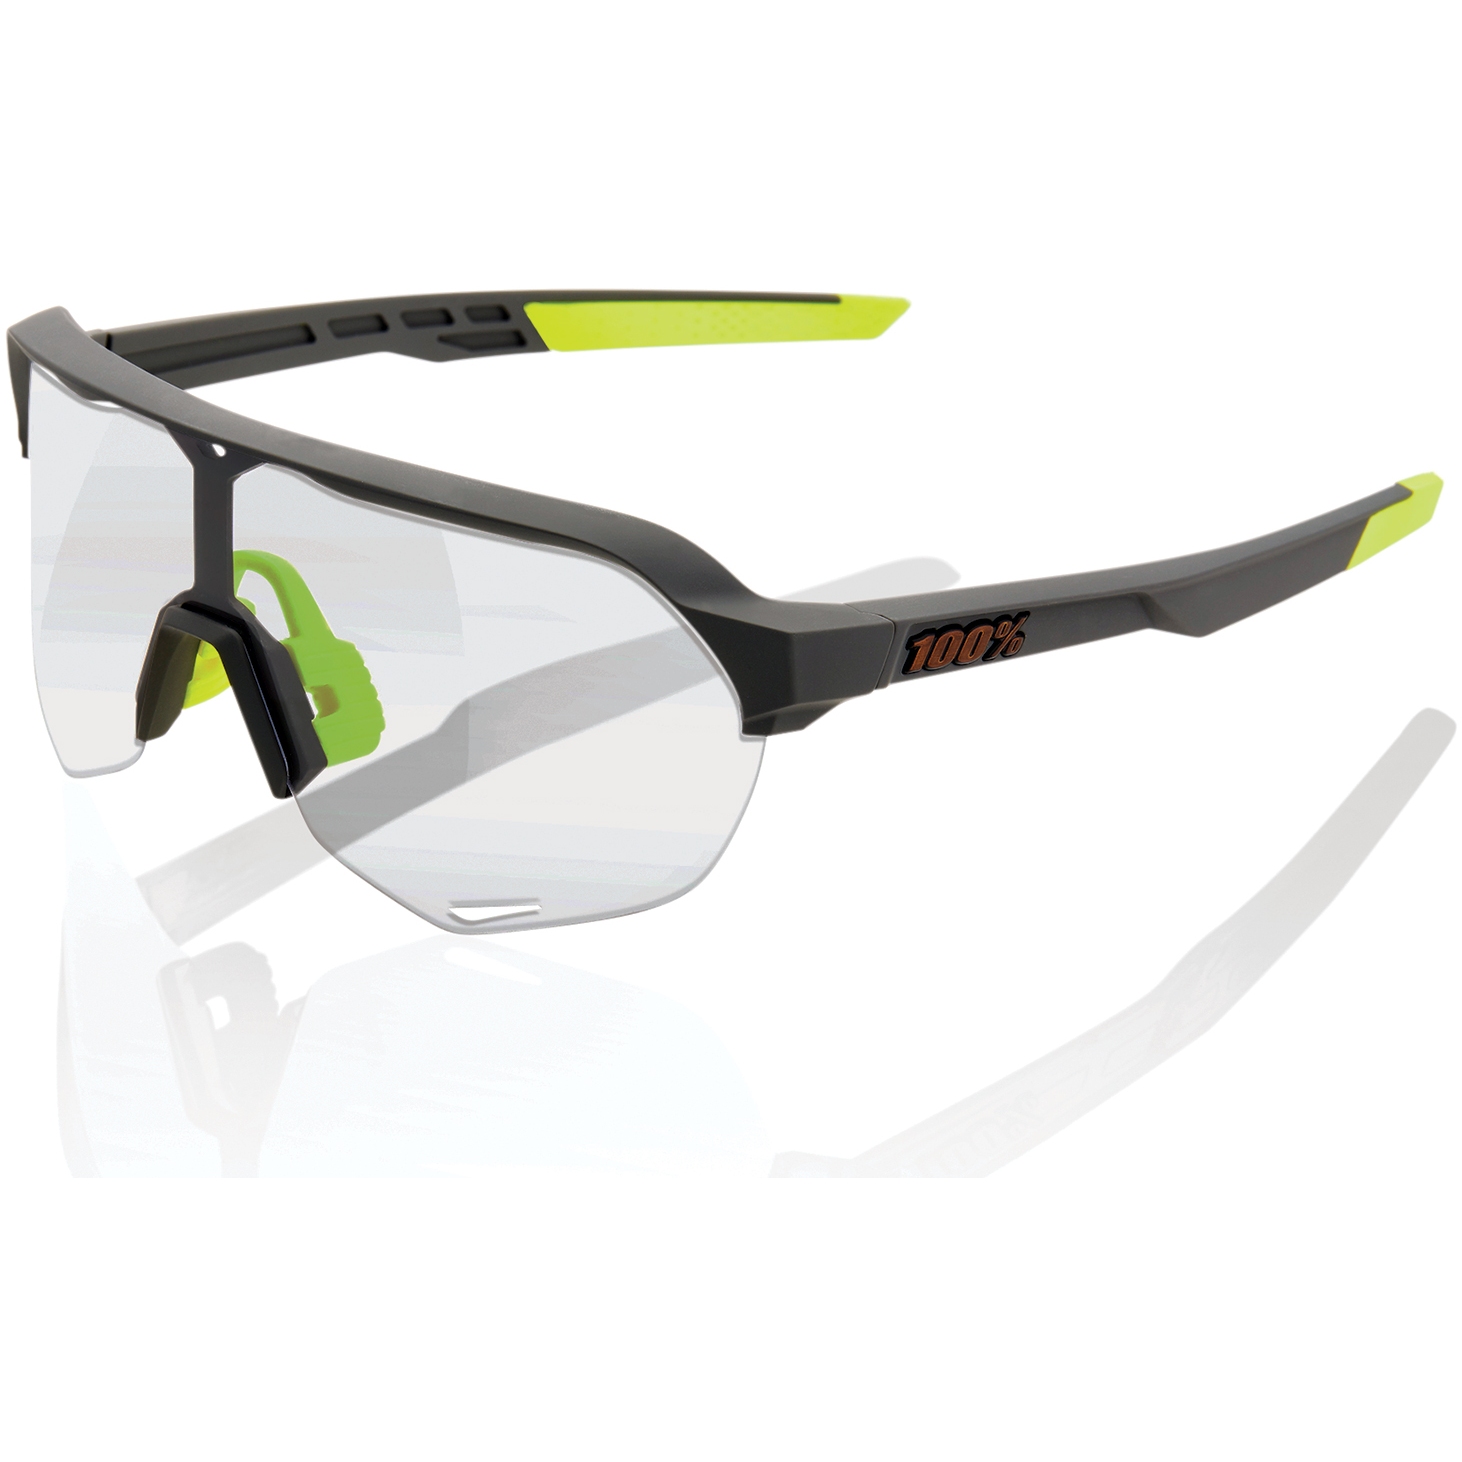 Productfoto van 100% S2 Glasses - Photochromic Lens - Soft Tact Cool Grey